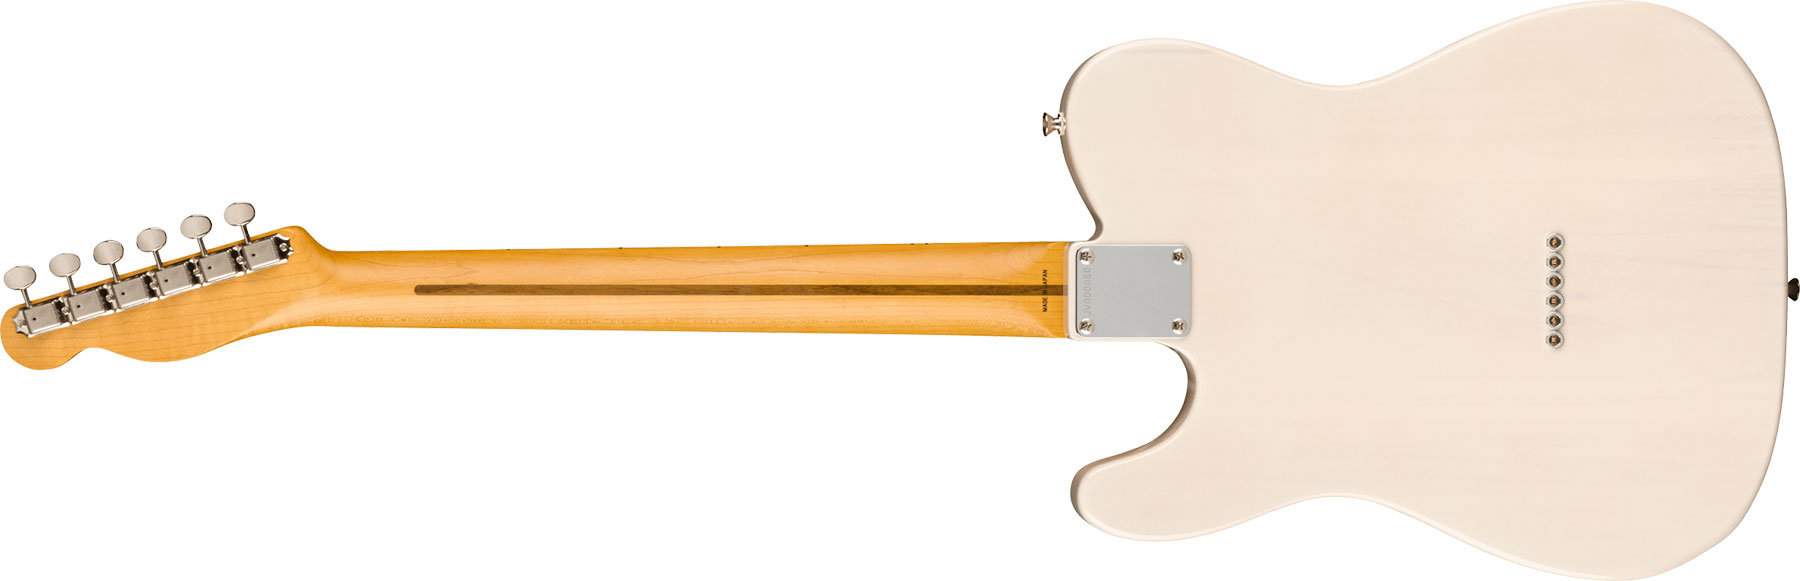 Fender Tele '50s Jv Modified Jap 2s Ht Mn - White Blonde - Tel shape electric guitar - Variation 1